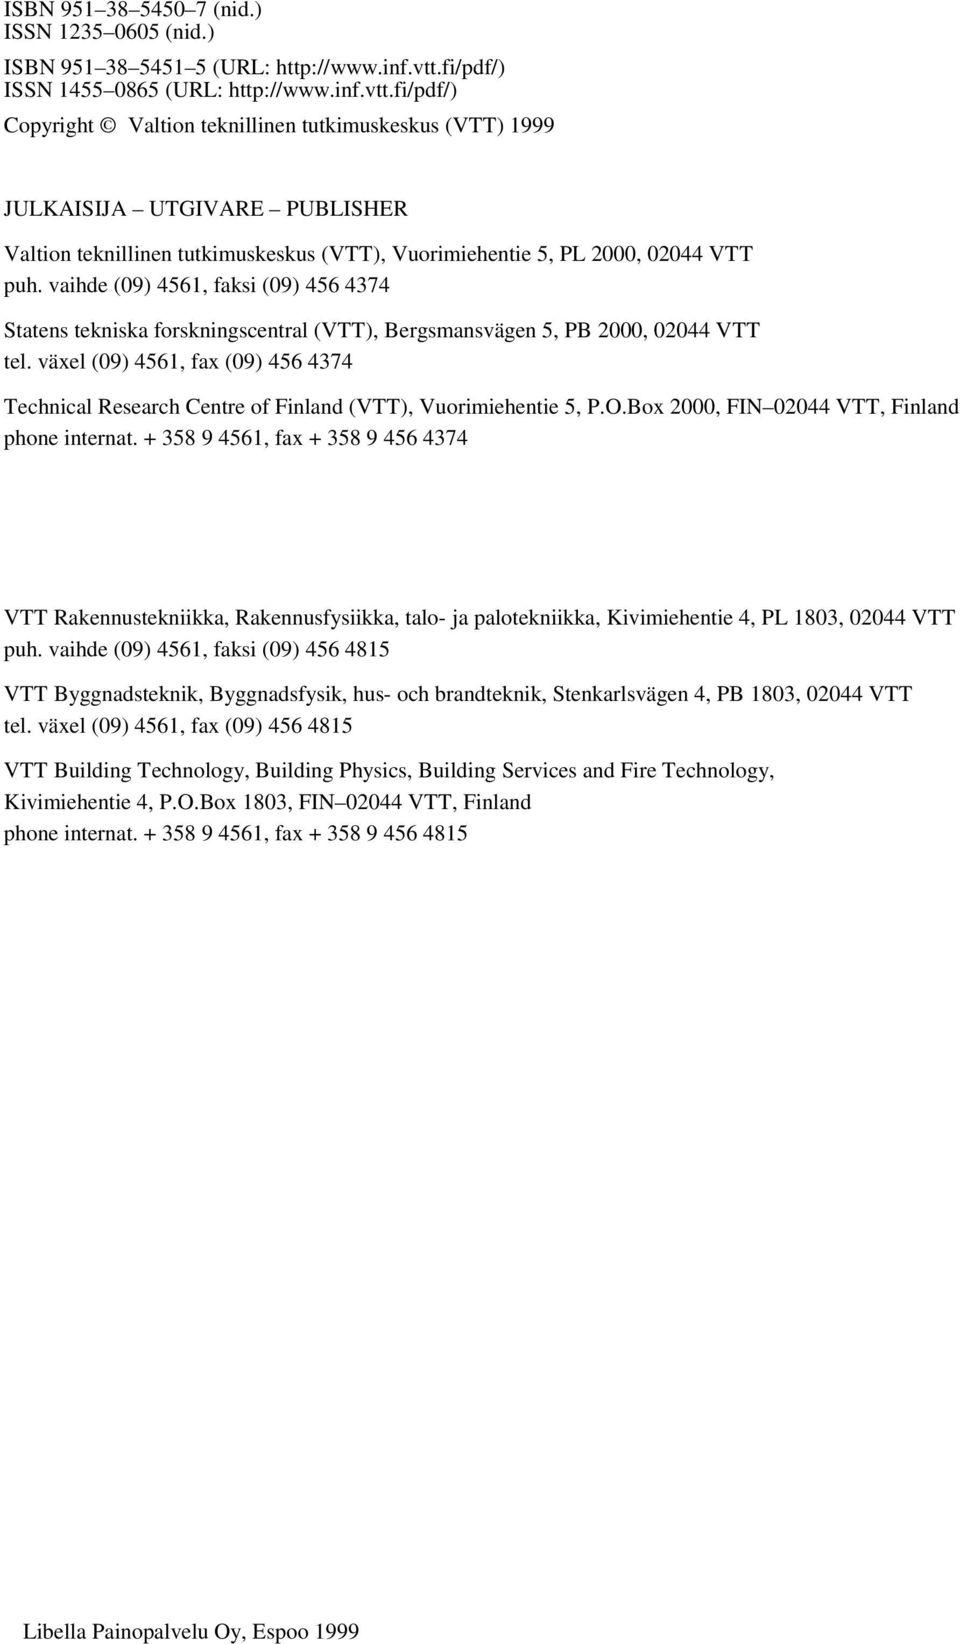 fi/pdf/) Copyright Valtion teknillinen tutkimuskeskus (VTT) 1999 JULKAISIJA UTGIVARE PUBLISHER Valtion teknillinen tutkimuskeskus (VTT), Vuorimiehentie 5, PL 2000, 02044 VTT puh.